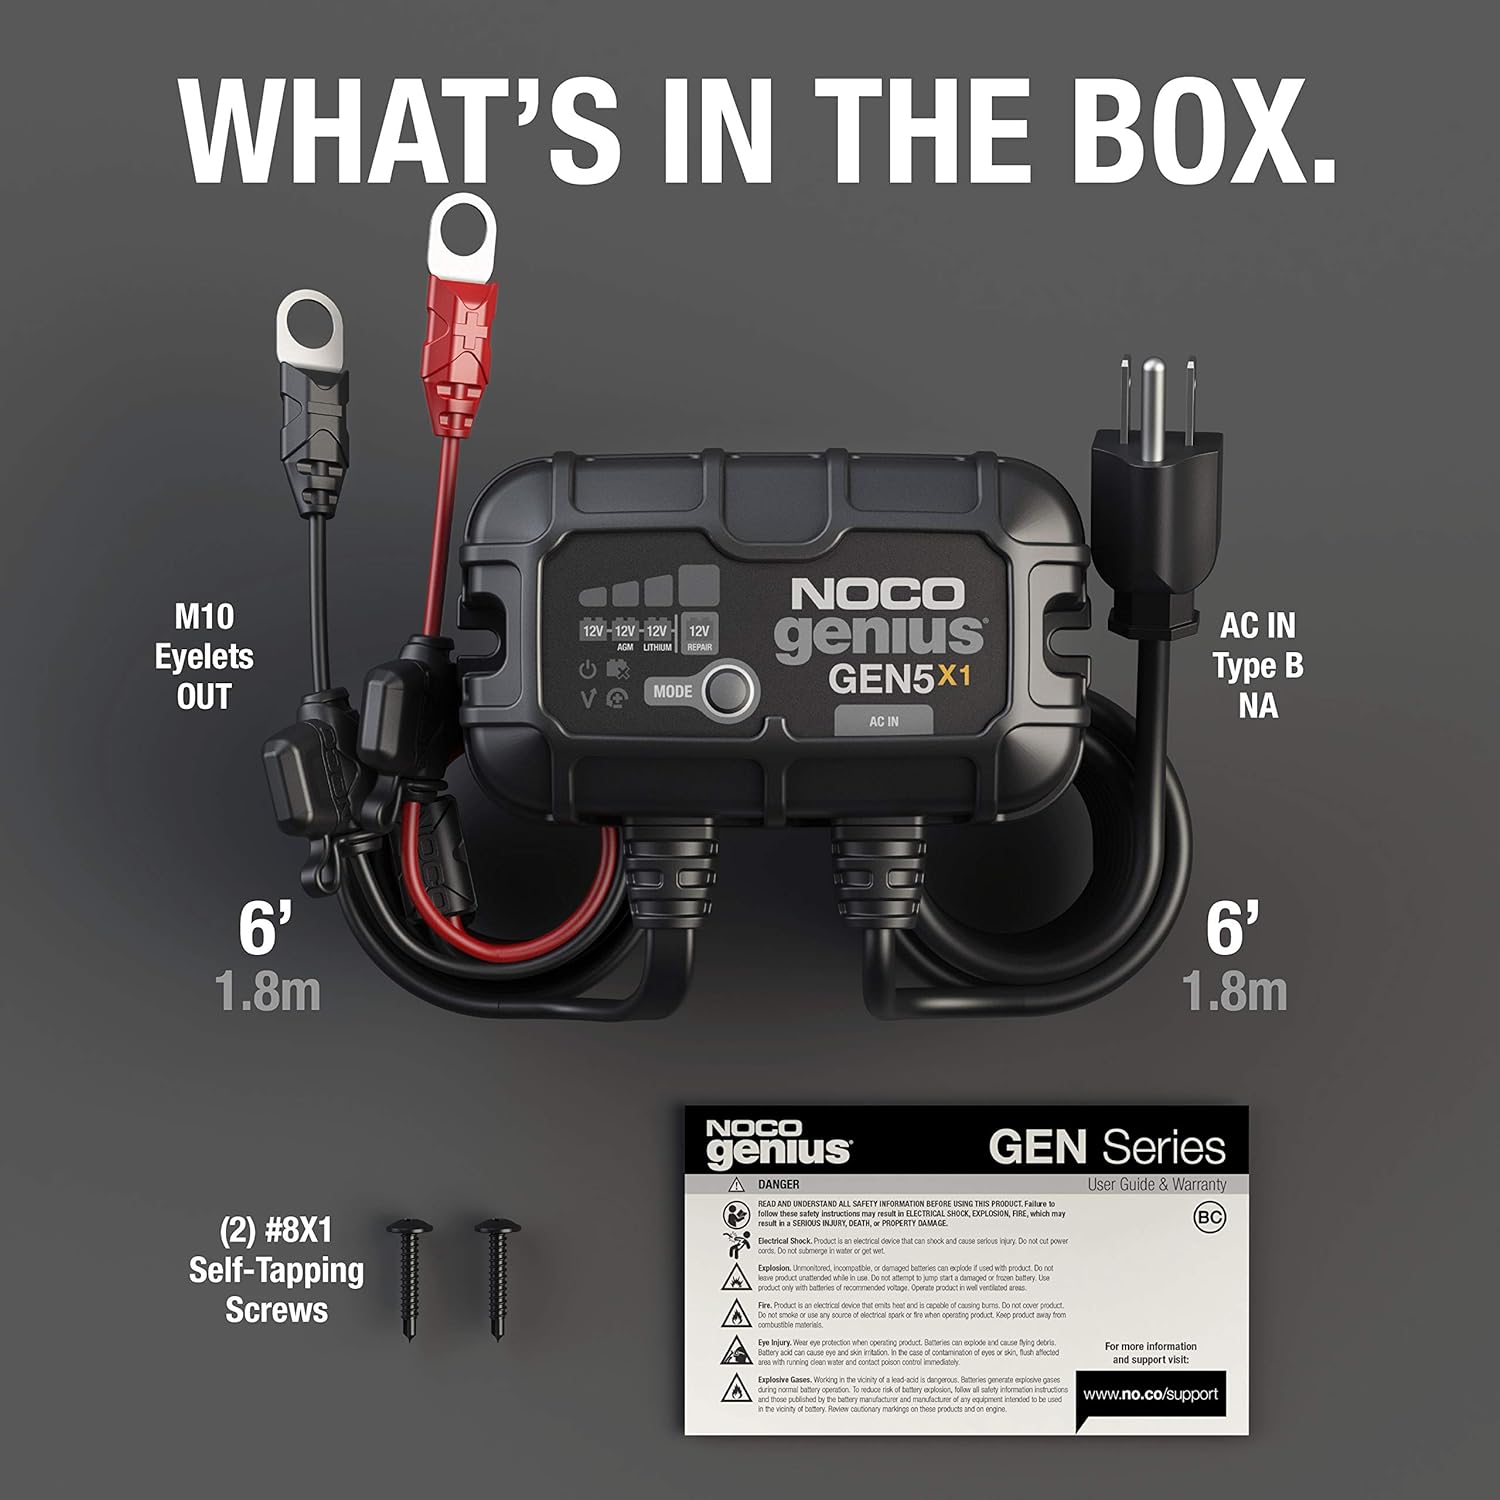 NOCO Genius GEN5X1 Battery Charger Review